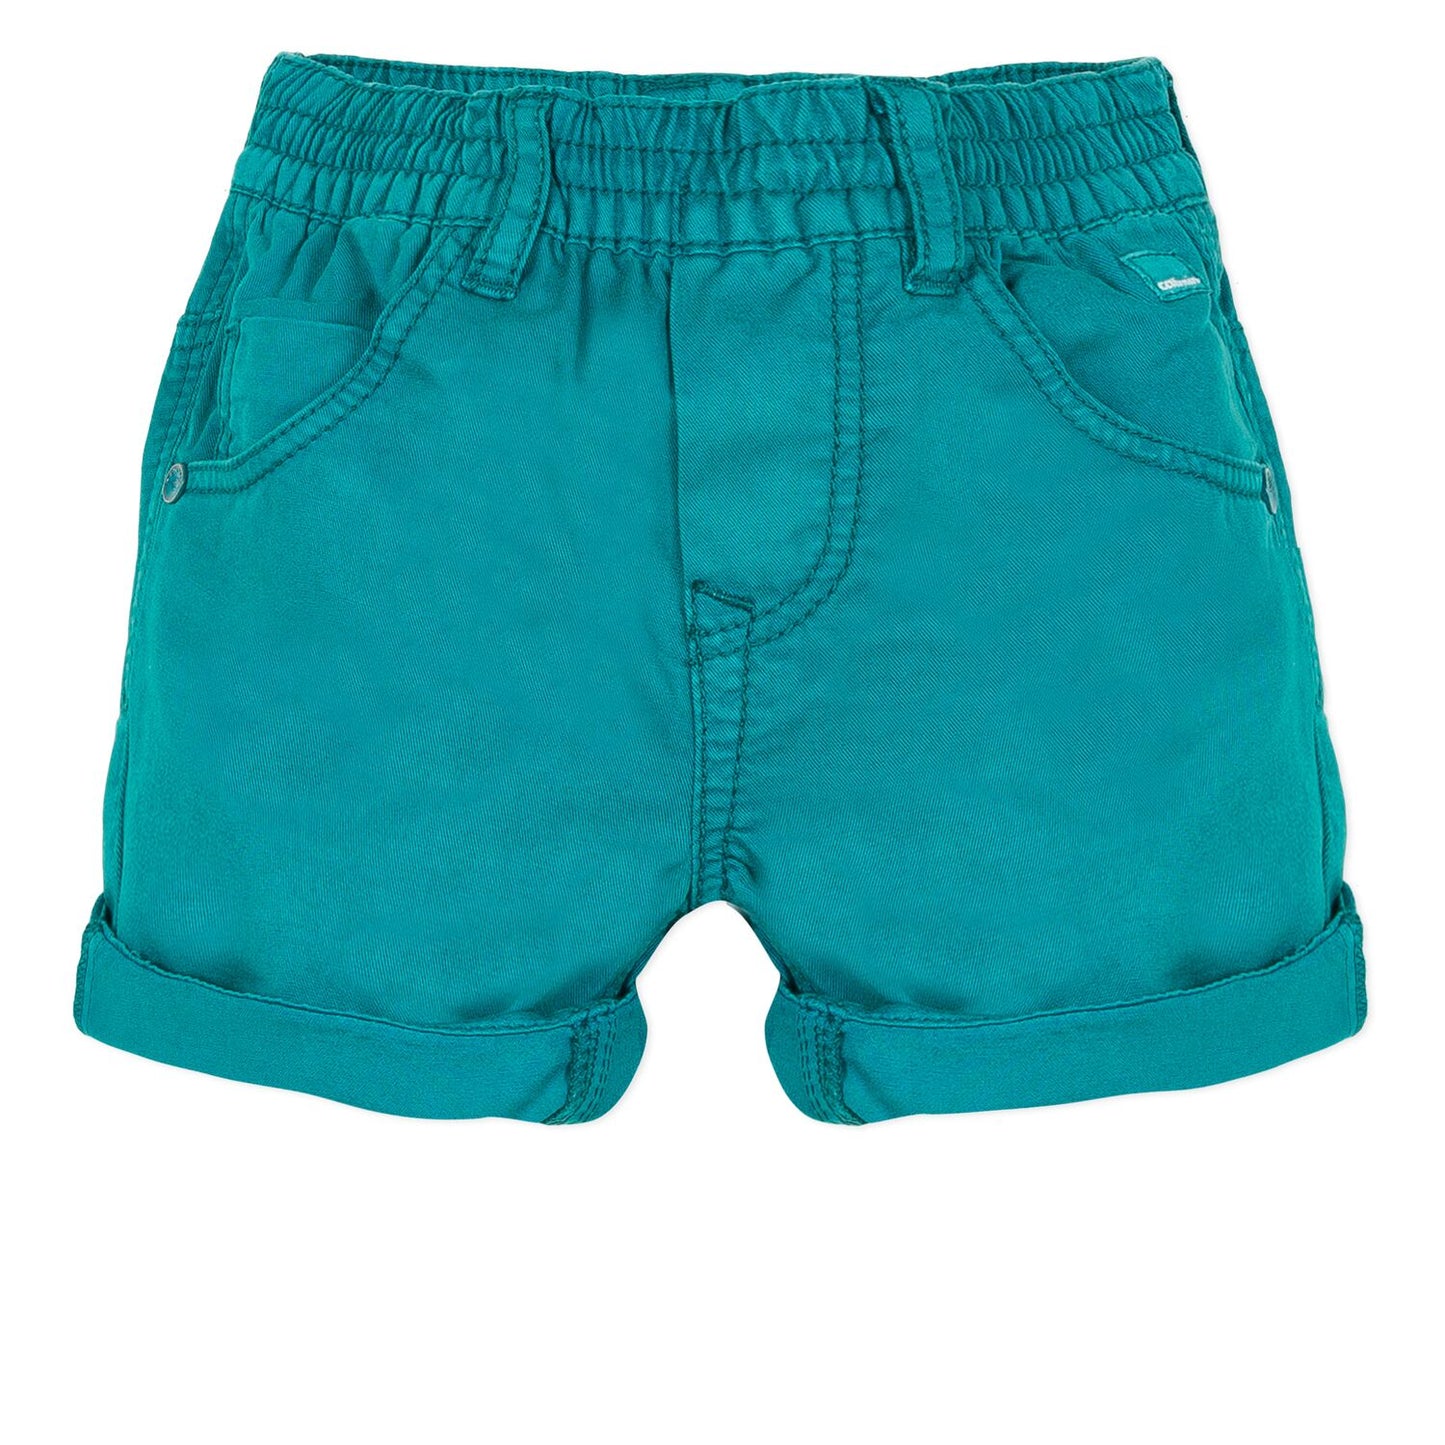 Catimini Bermuda Shorts in Emerald Tint